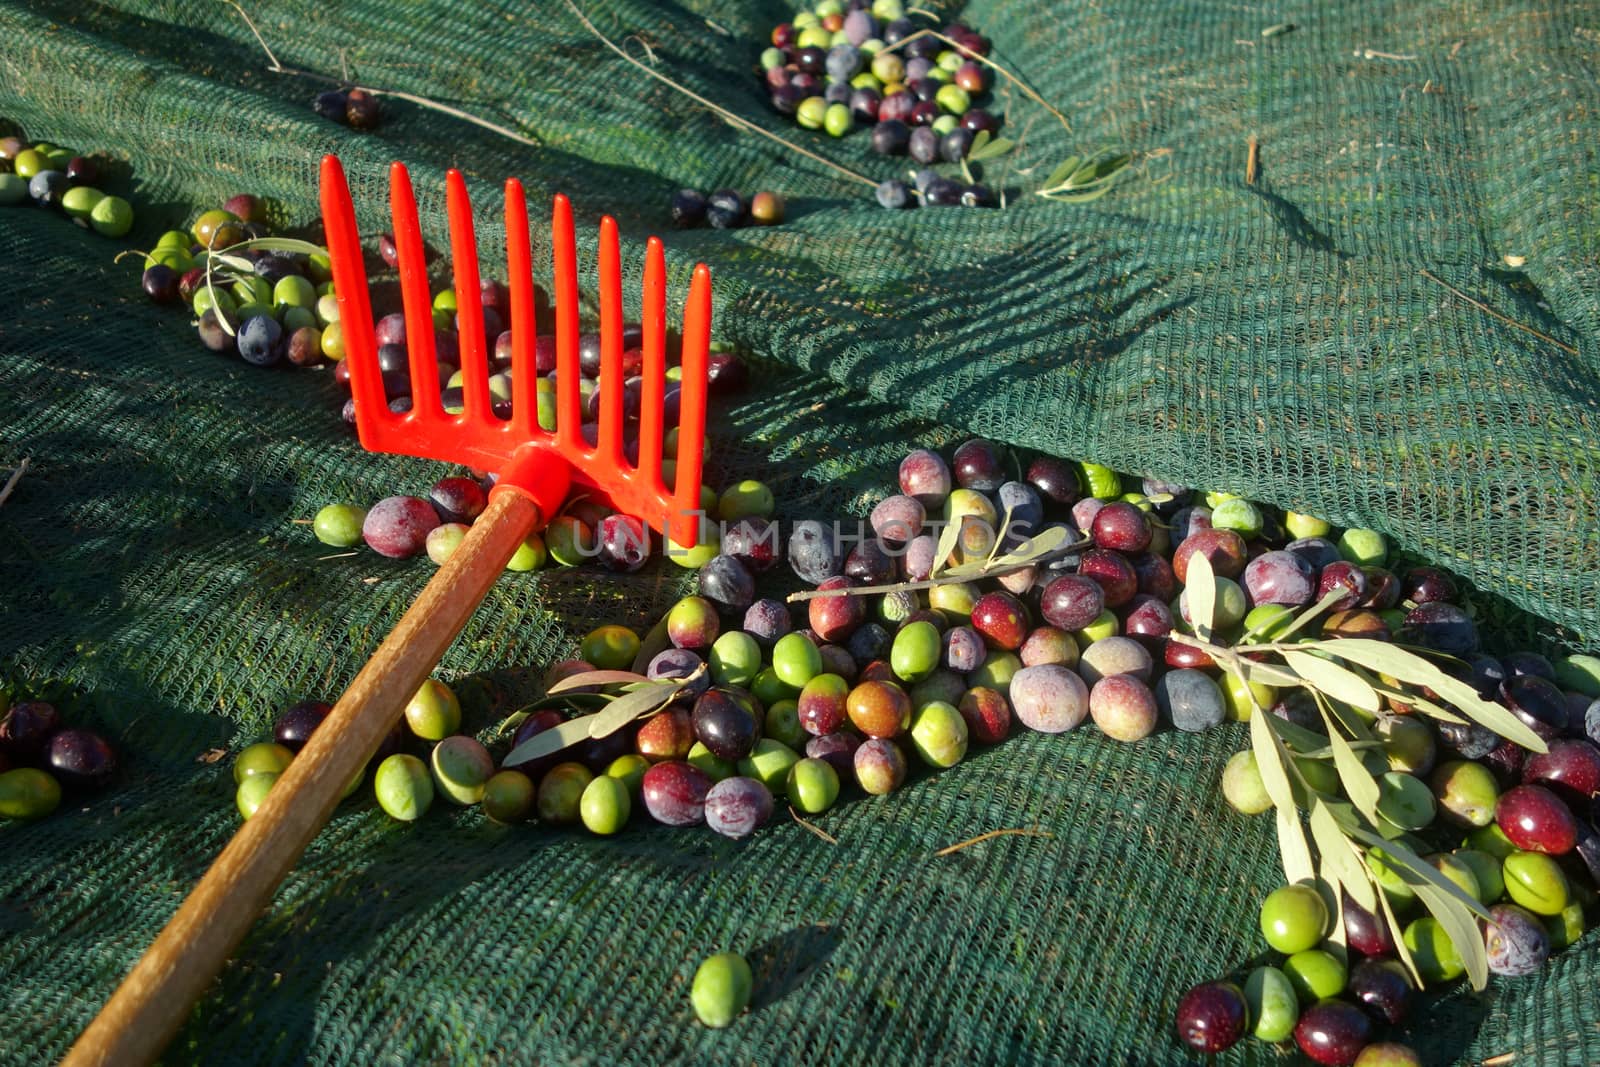 Harvesting olives by Portokalis